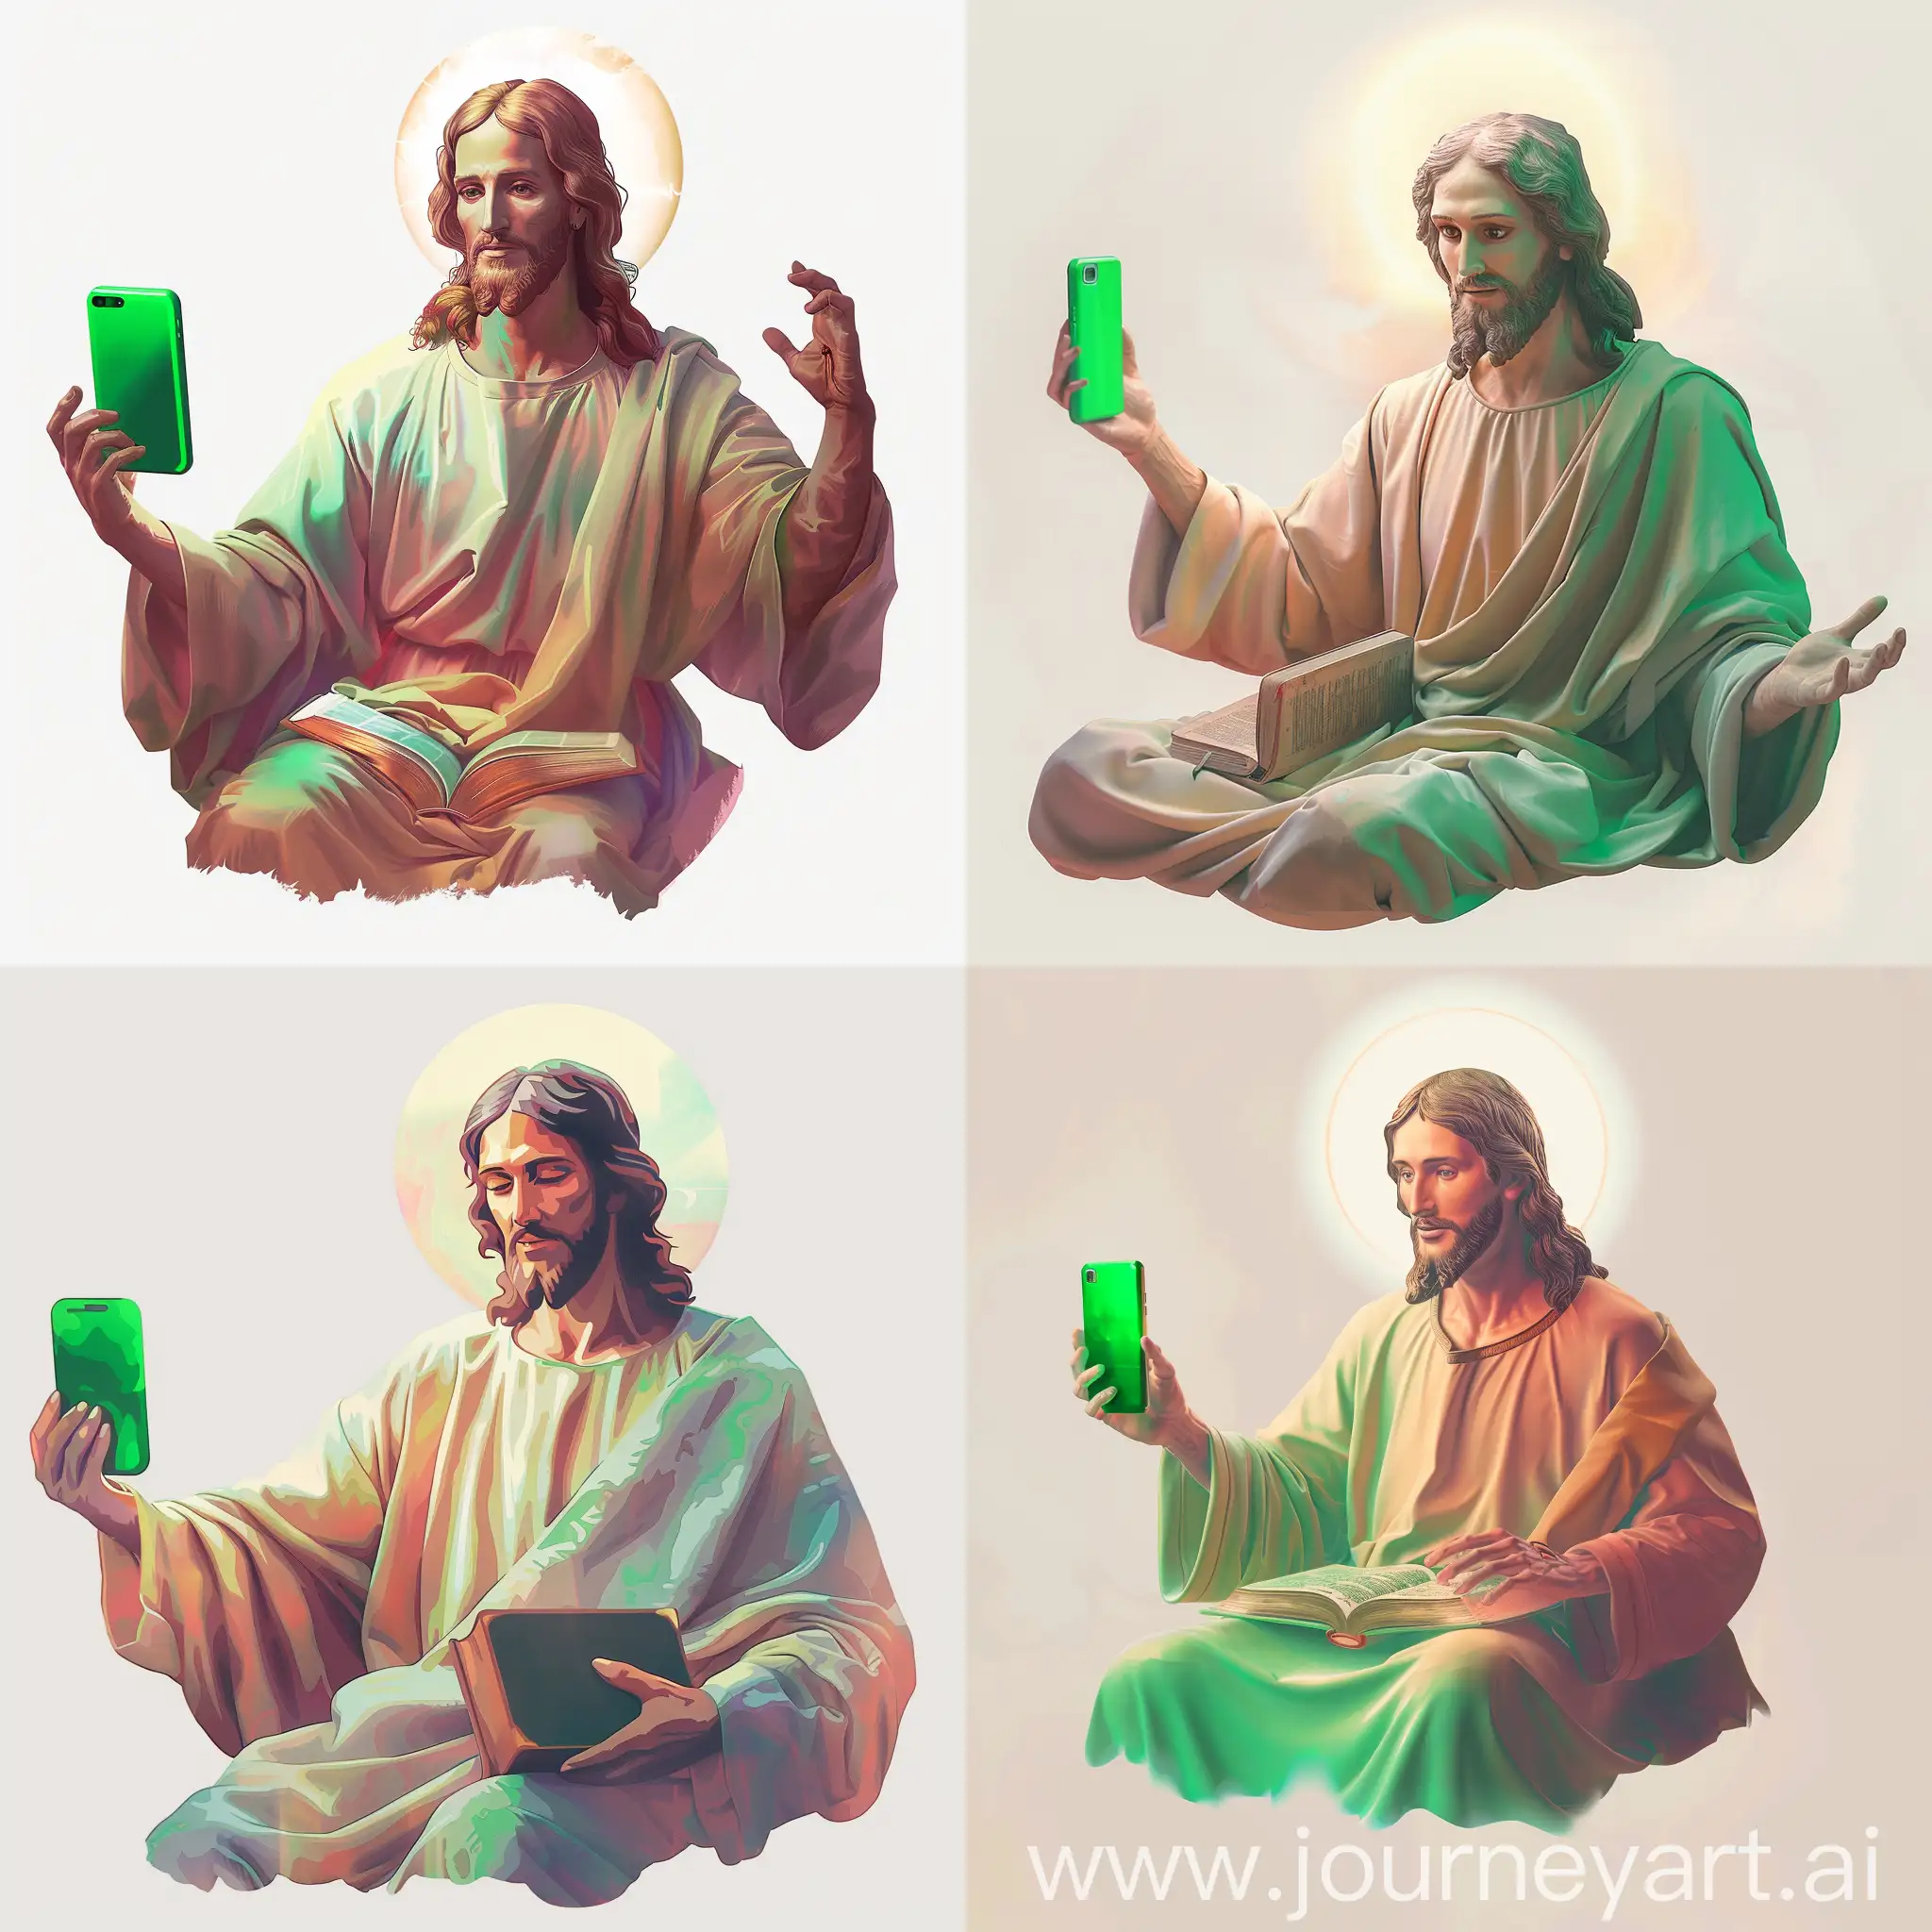 Modern-Therapist-Jesus-Christ-Holding-a-Green-Smartphone-in-Calming-Gesture